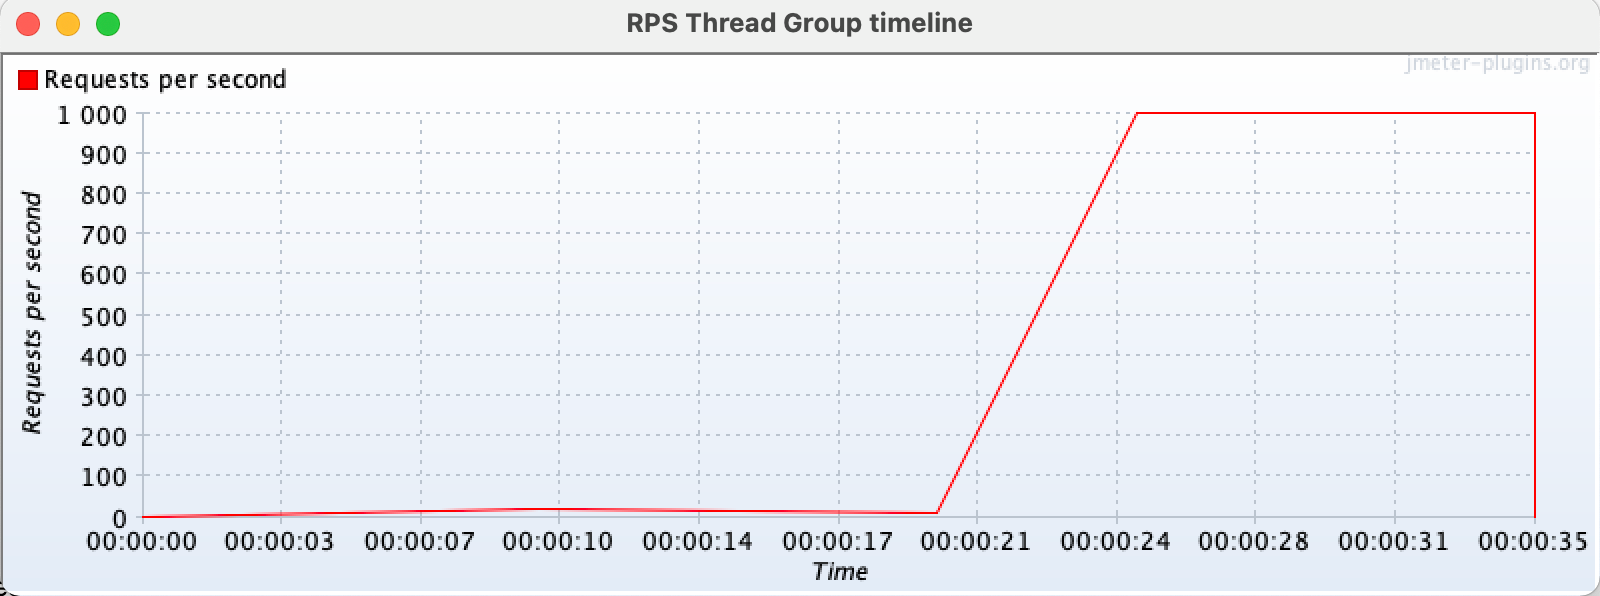 RPS Thread Group Timeline